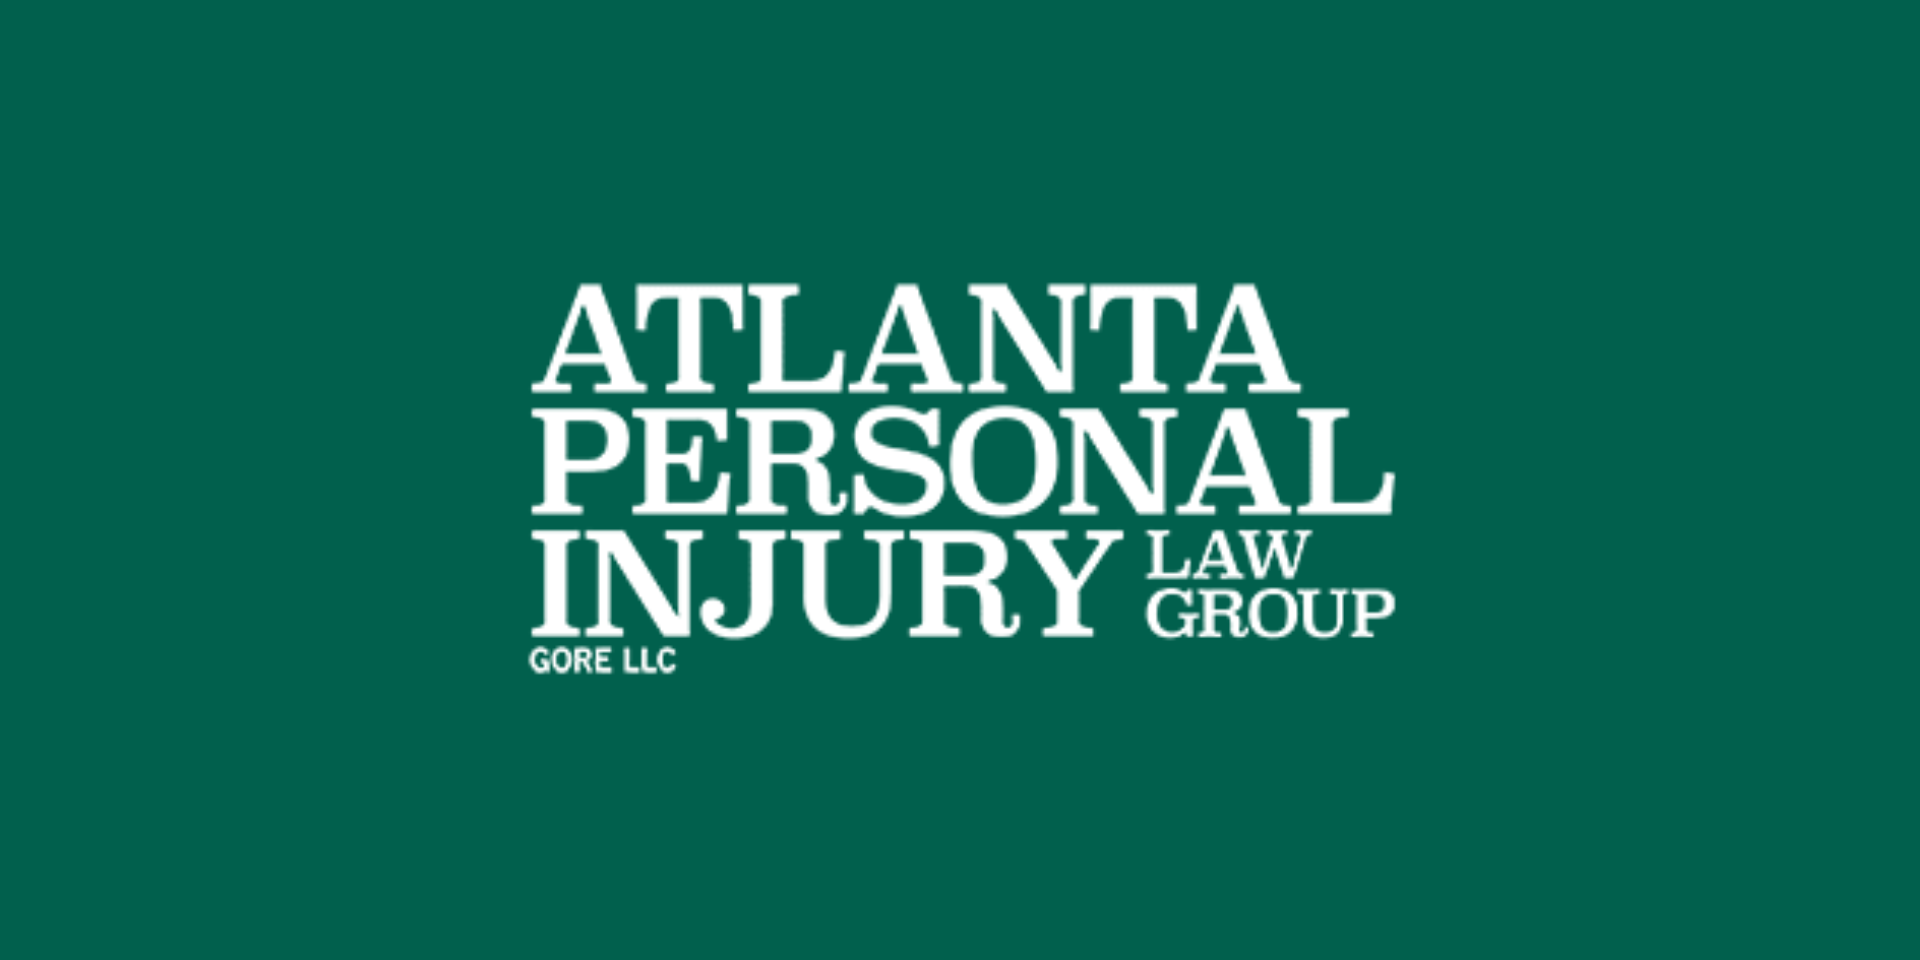 Atlanta Personal Injury Law Group – Gore LLC